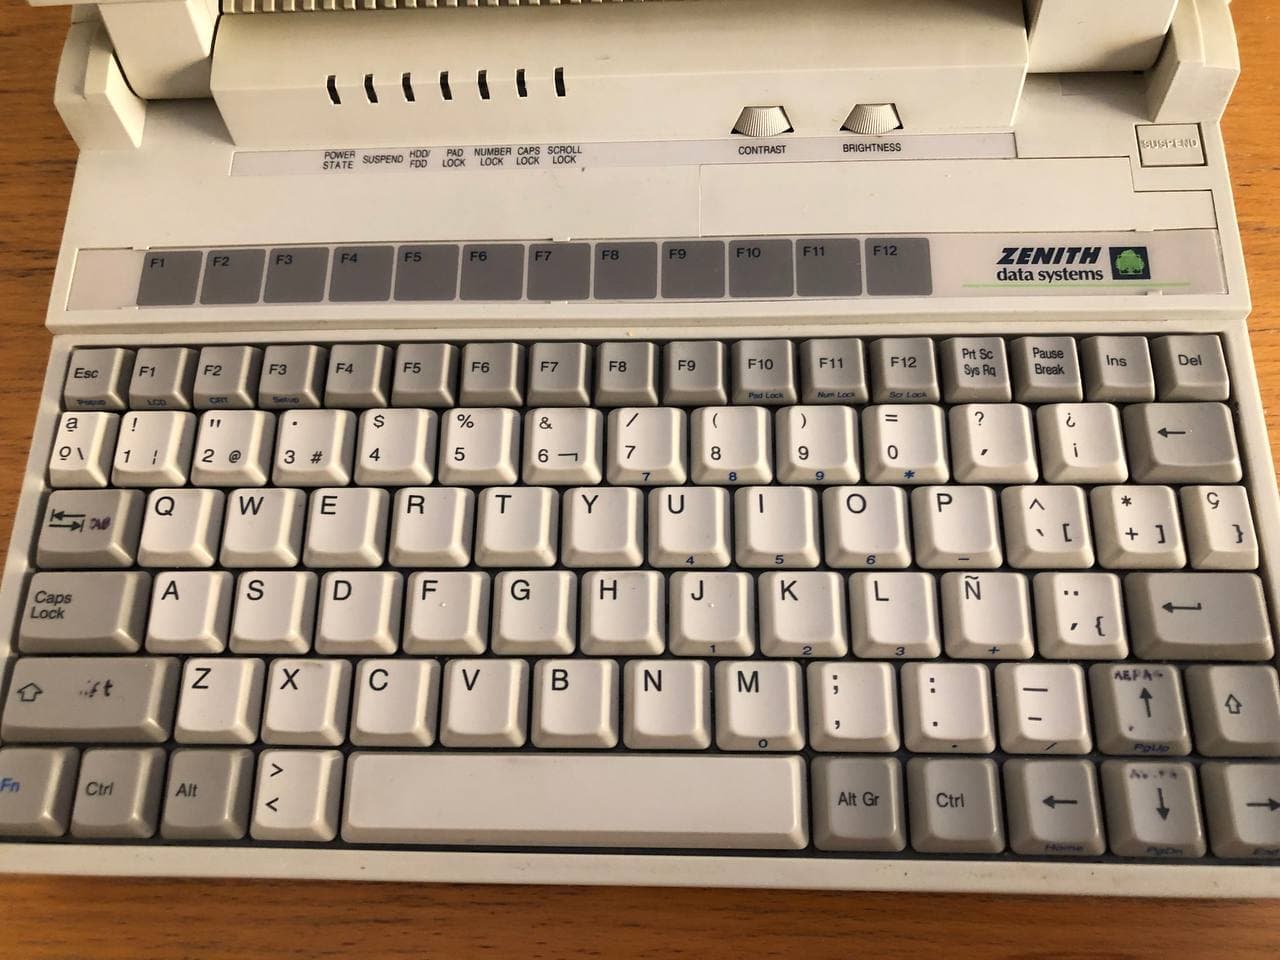 Обзор ноутбука 1990 года — Zenith MasterSport 386sx - 5